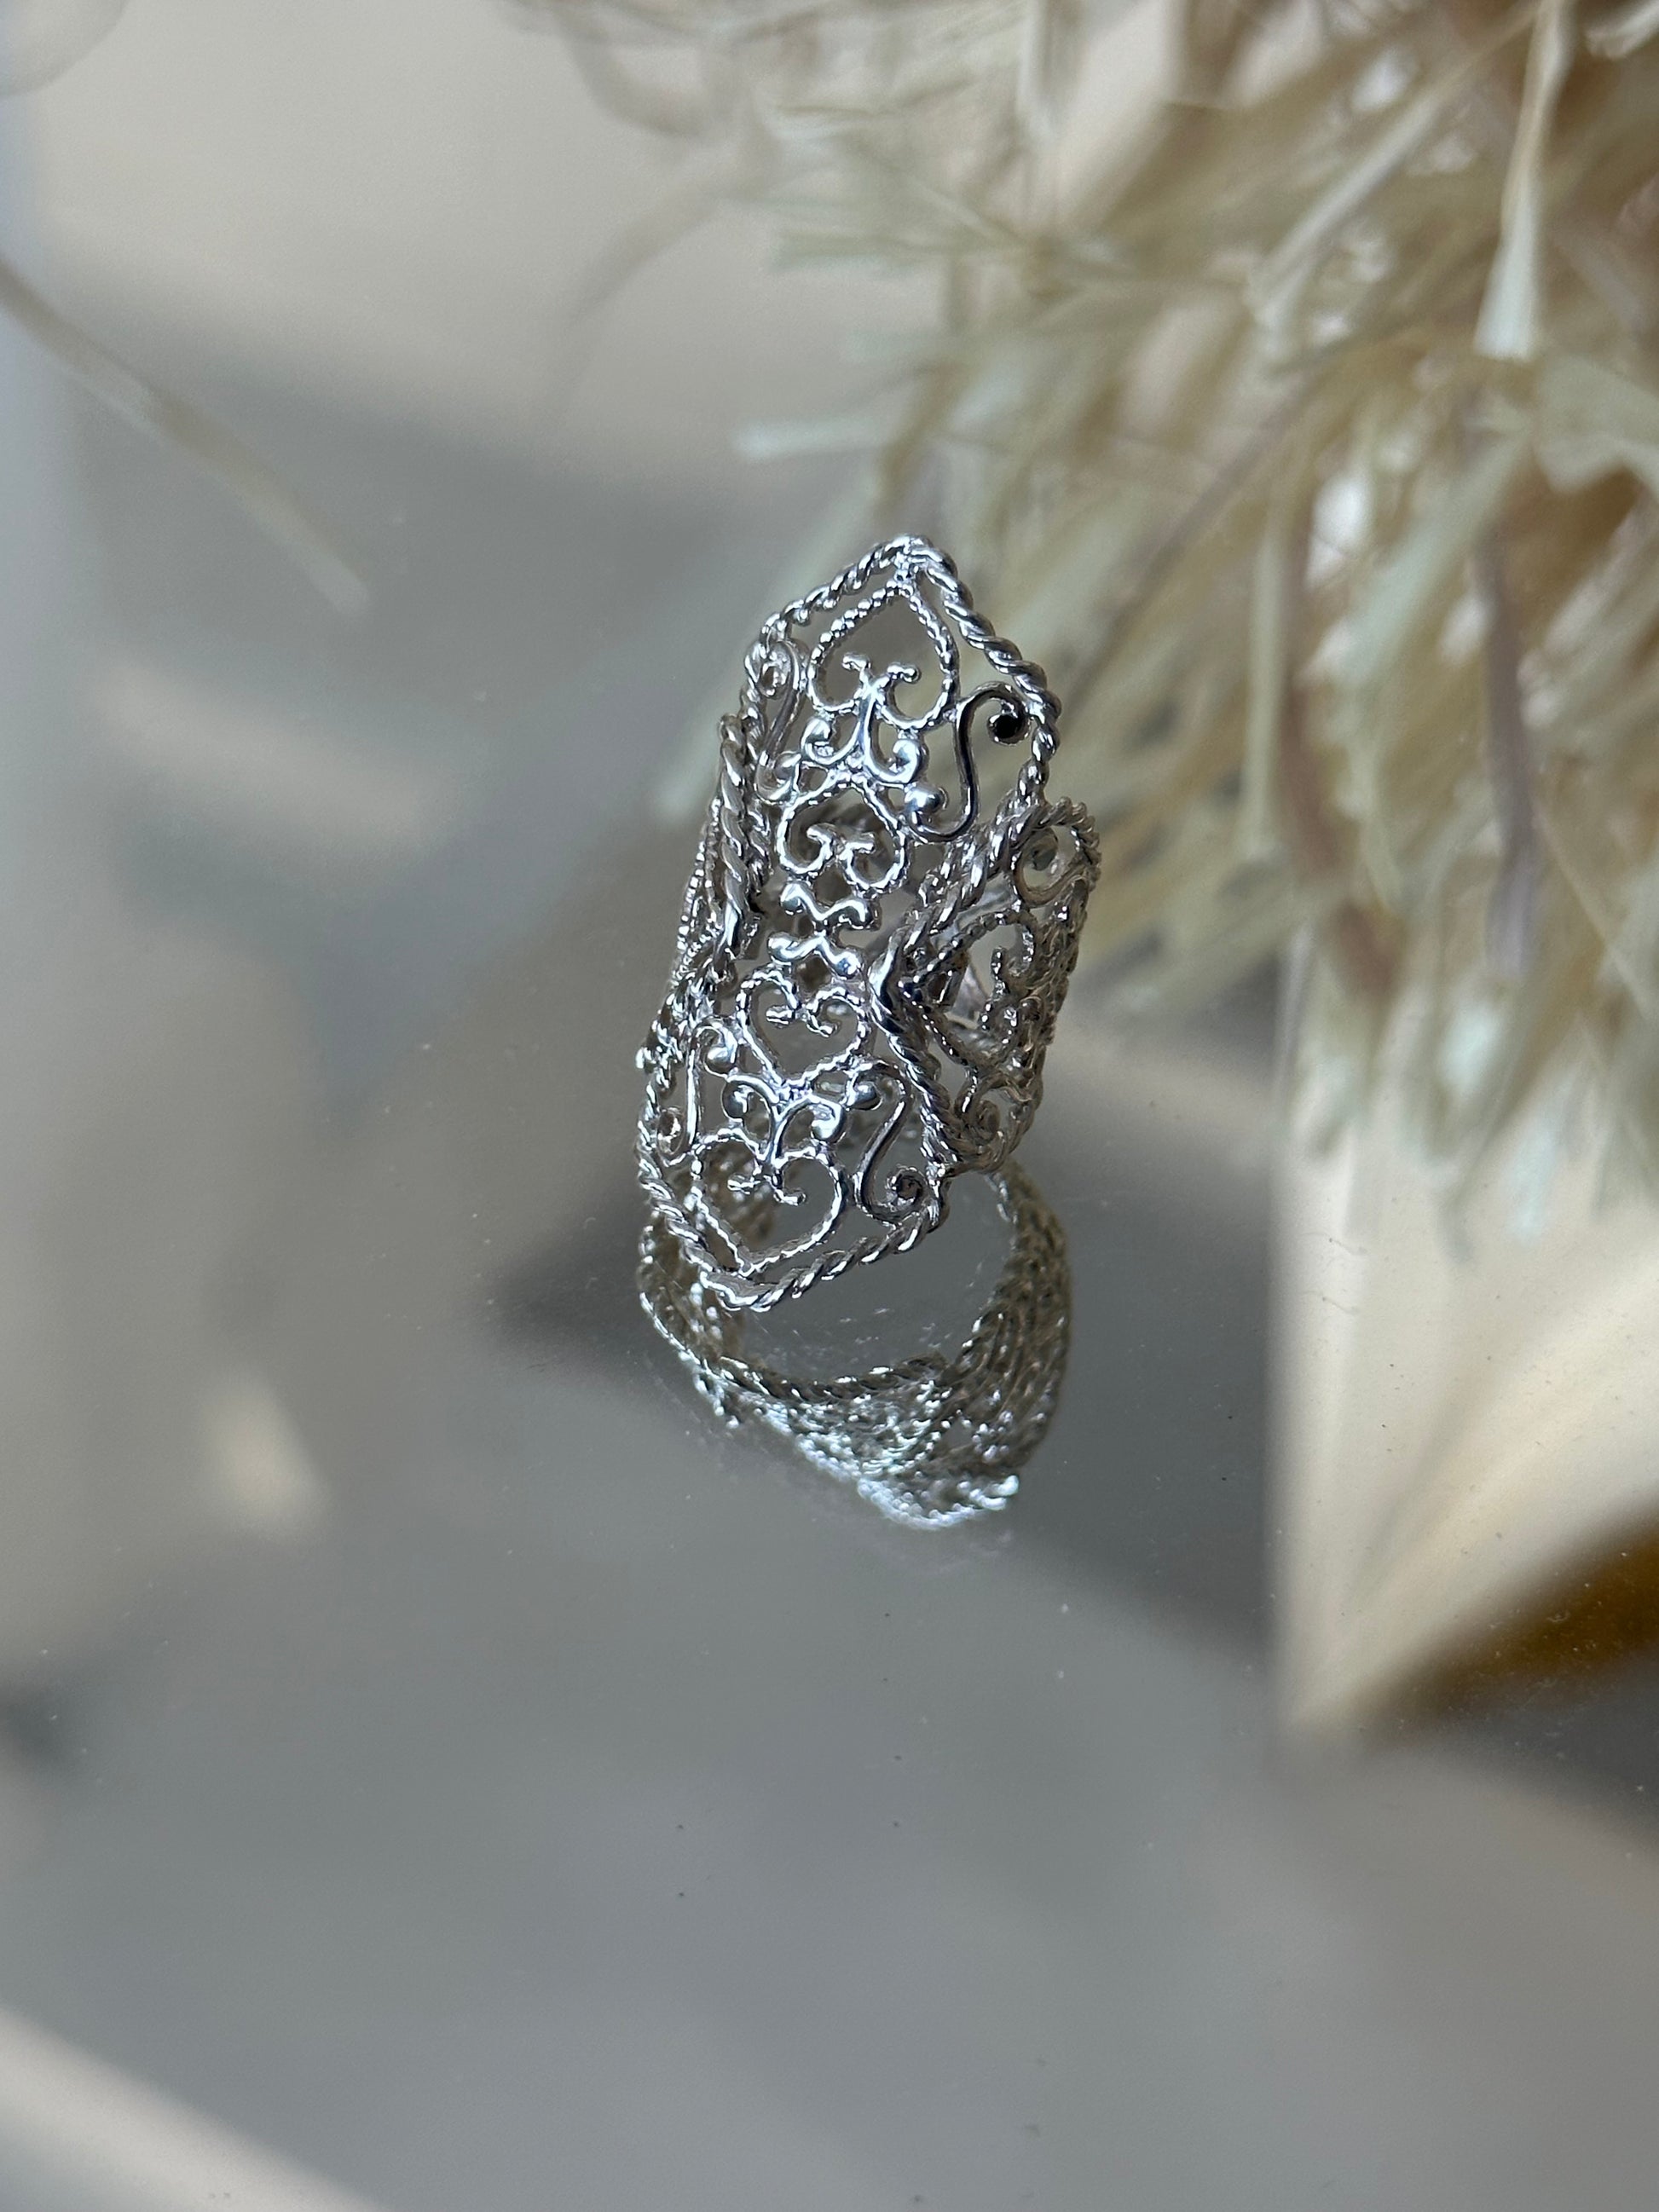 "SIlver filigree ornament armenian ring"